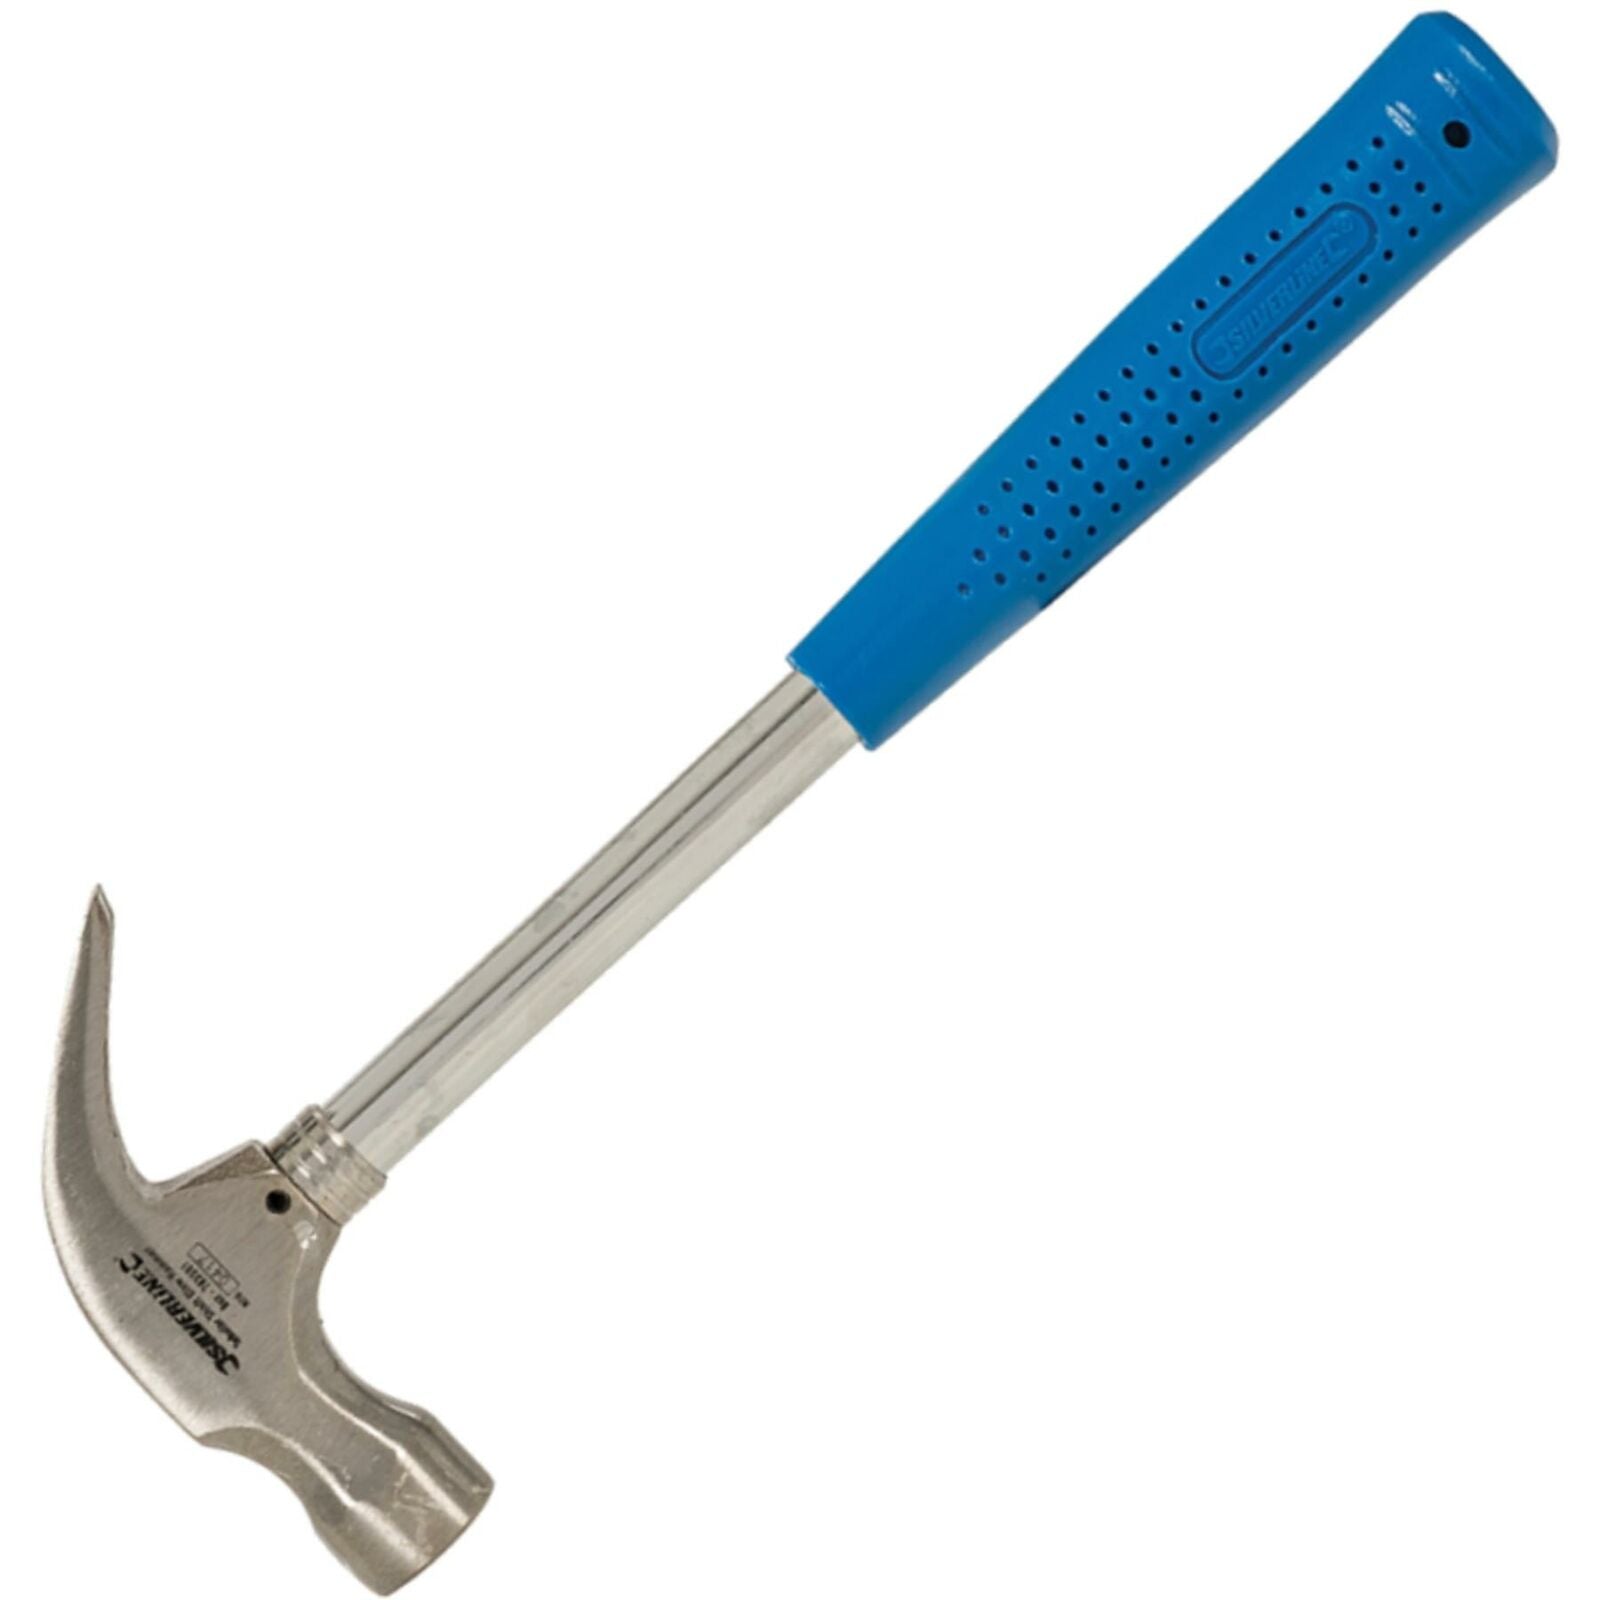 Silverline 8oz Tubular Shaft Claw Hammer Rubber Grip Handel Hardened Steel Head